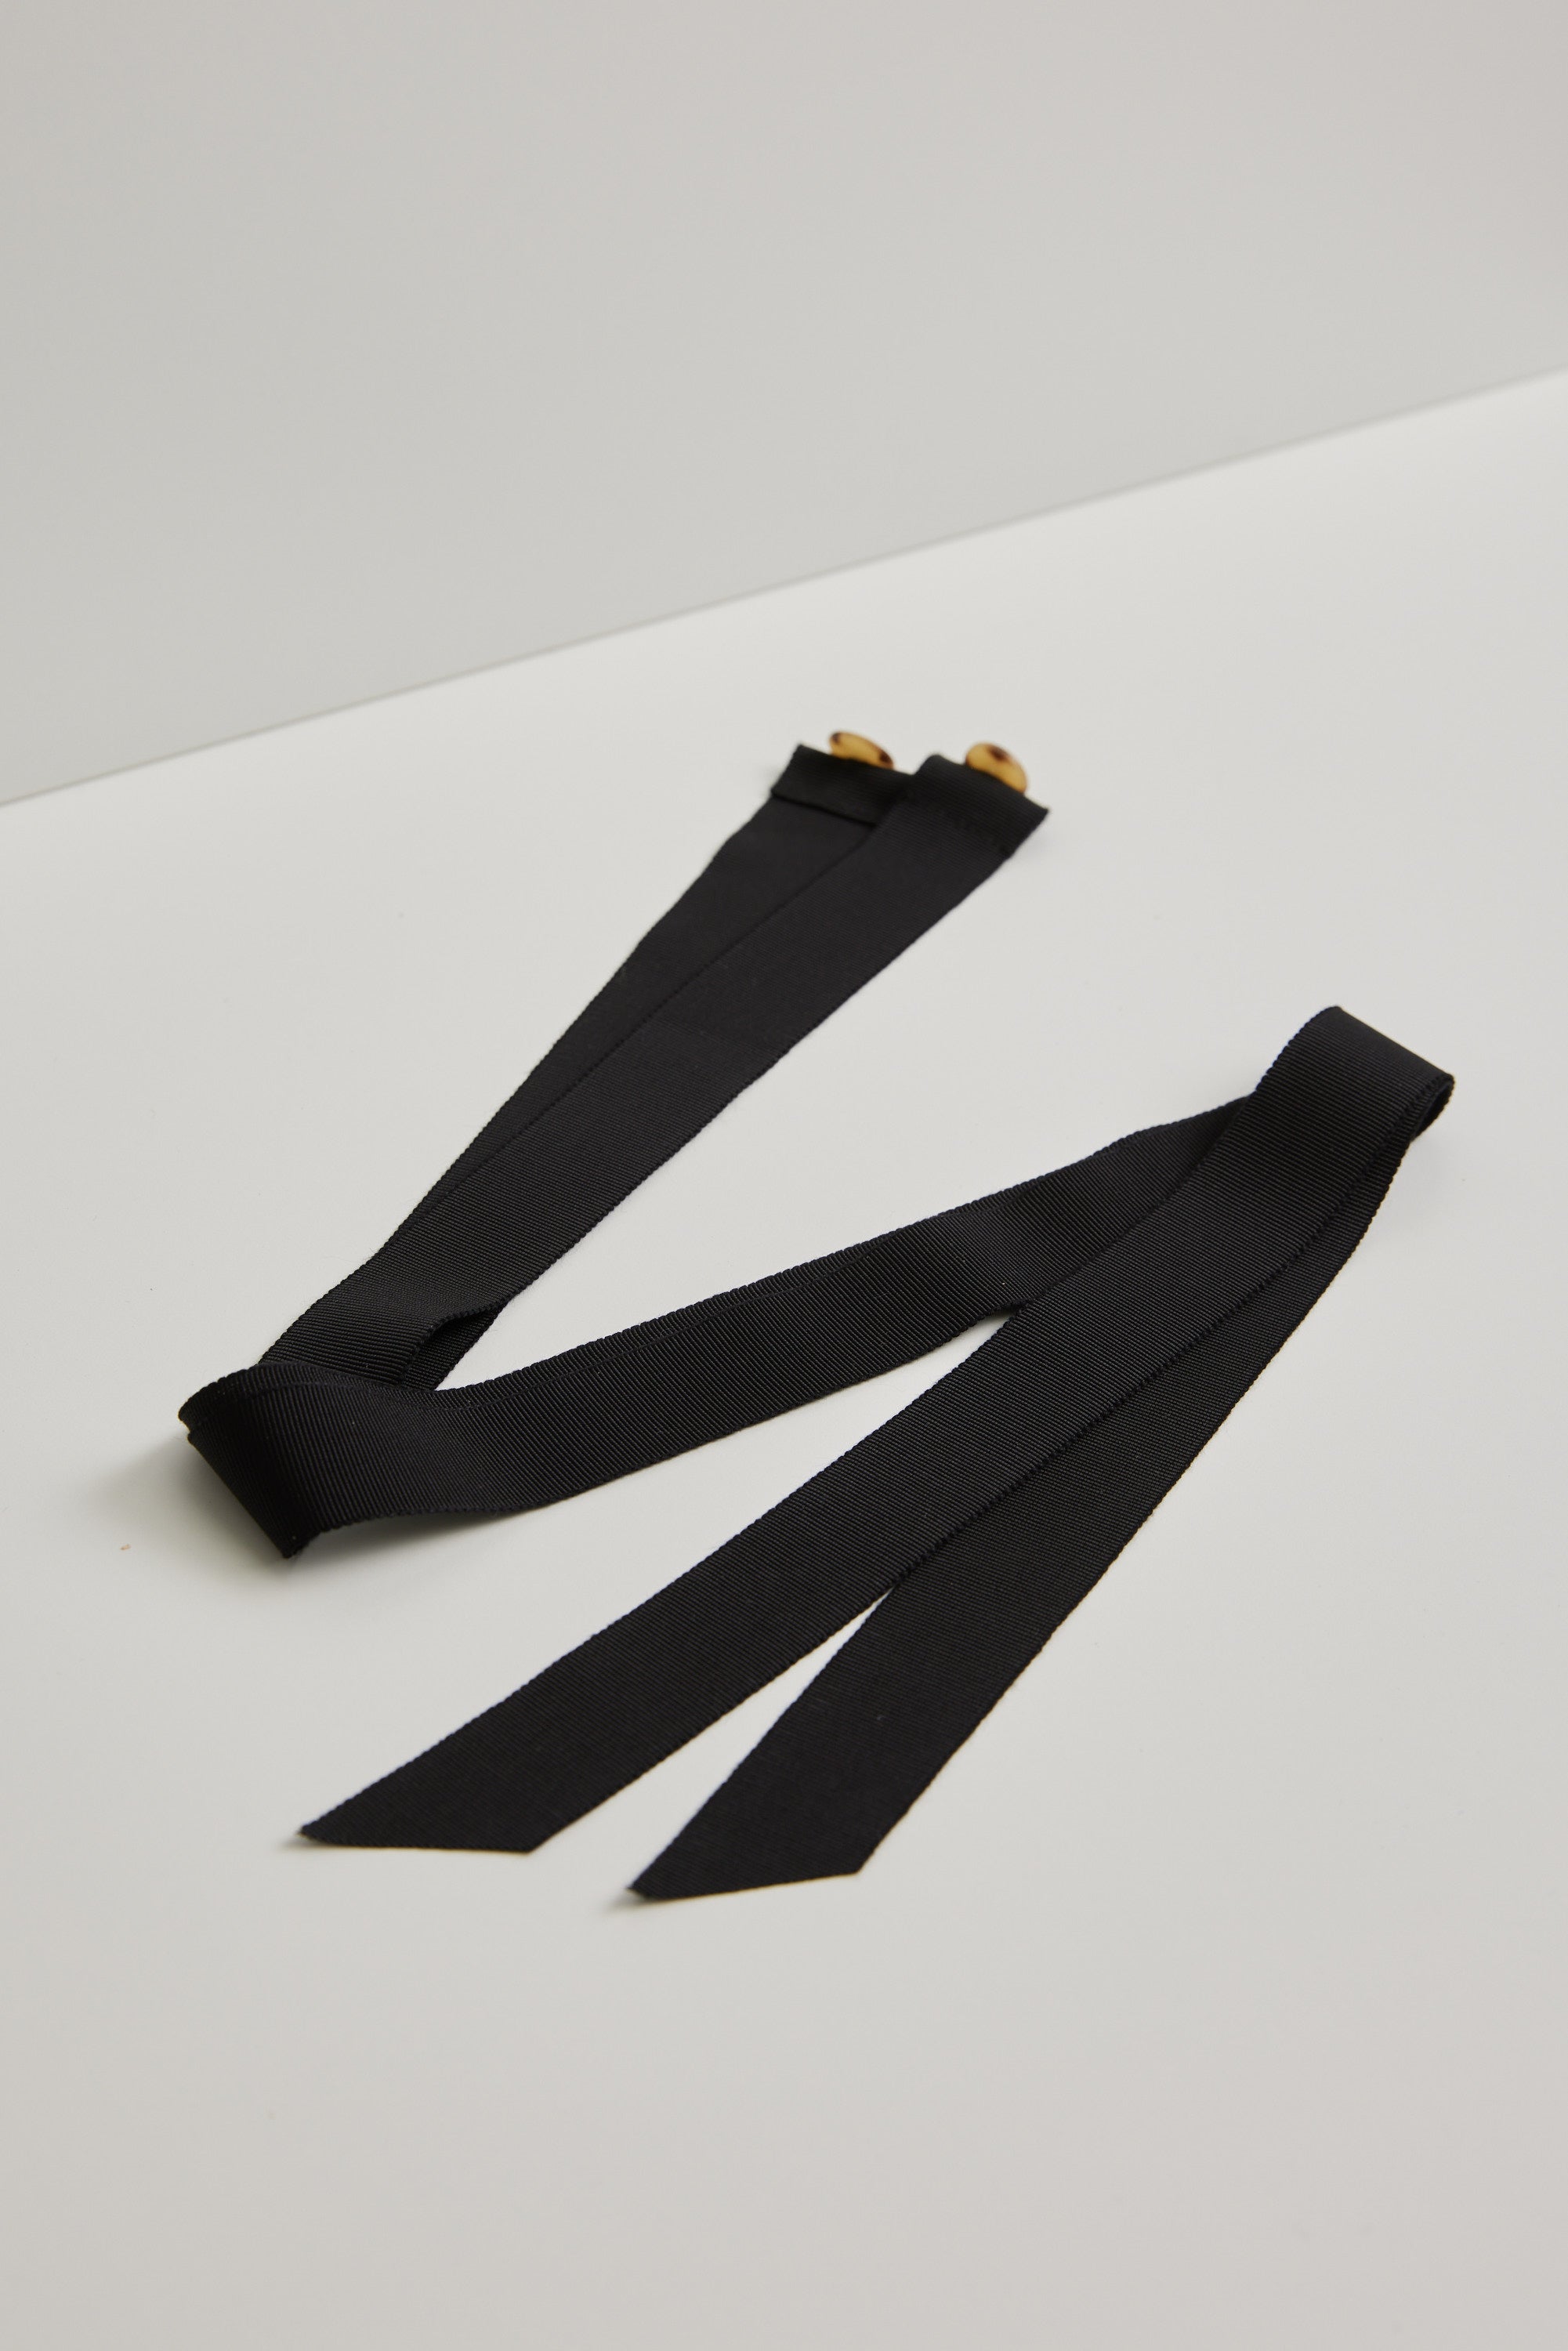 Calcarella straw hat - Black straw fringe and black detachable ribbon